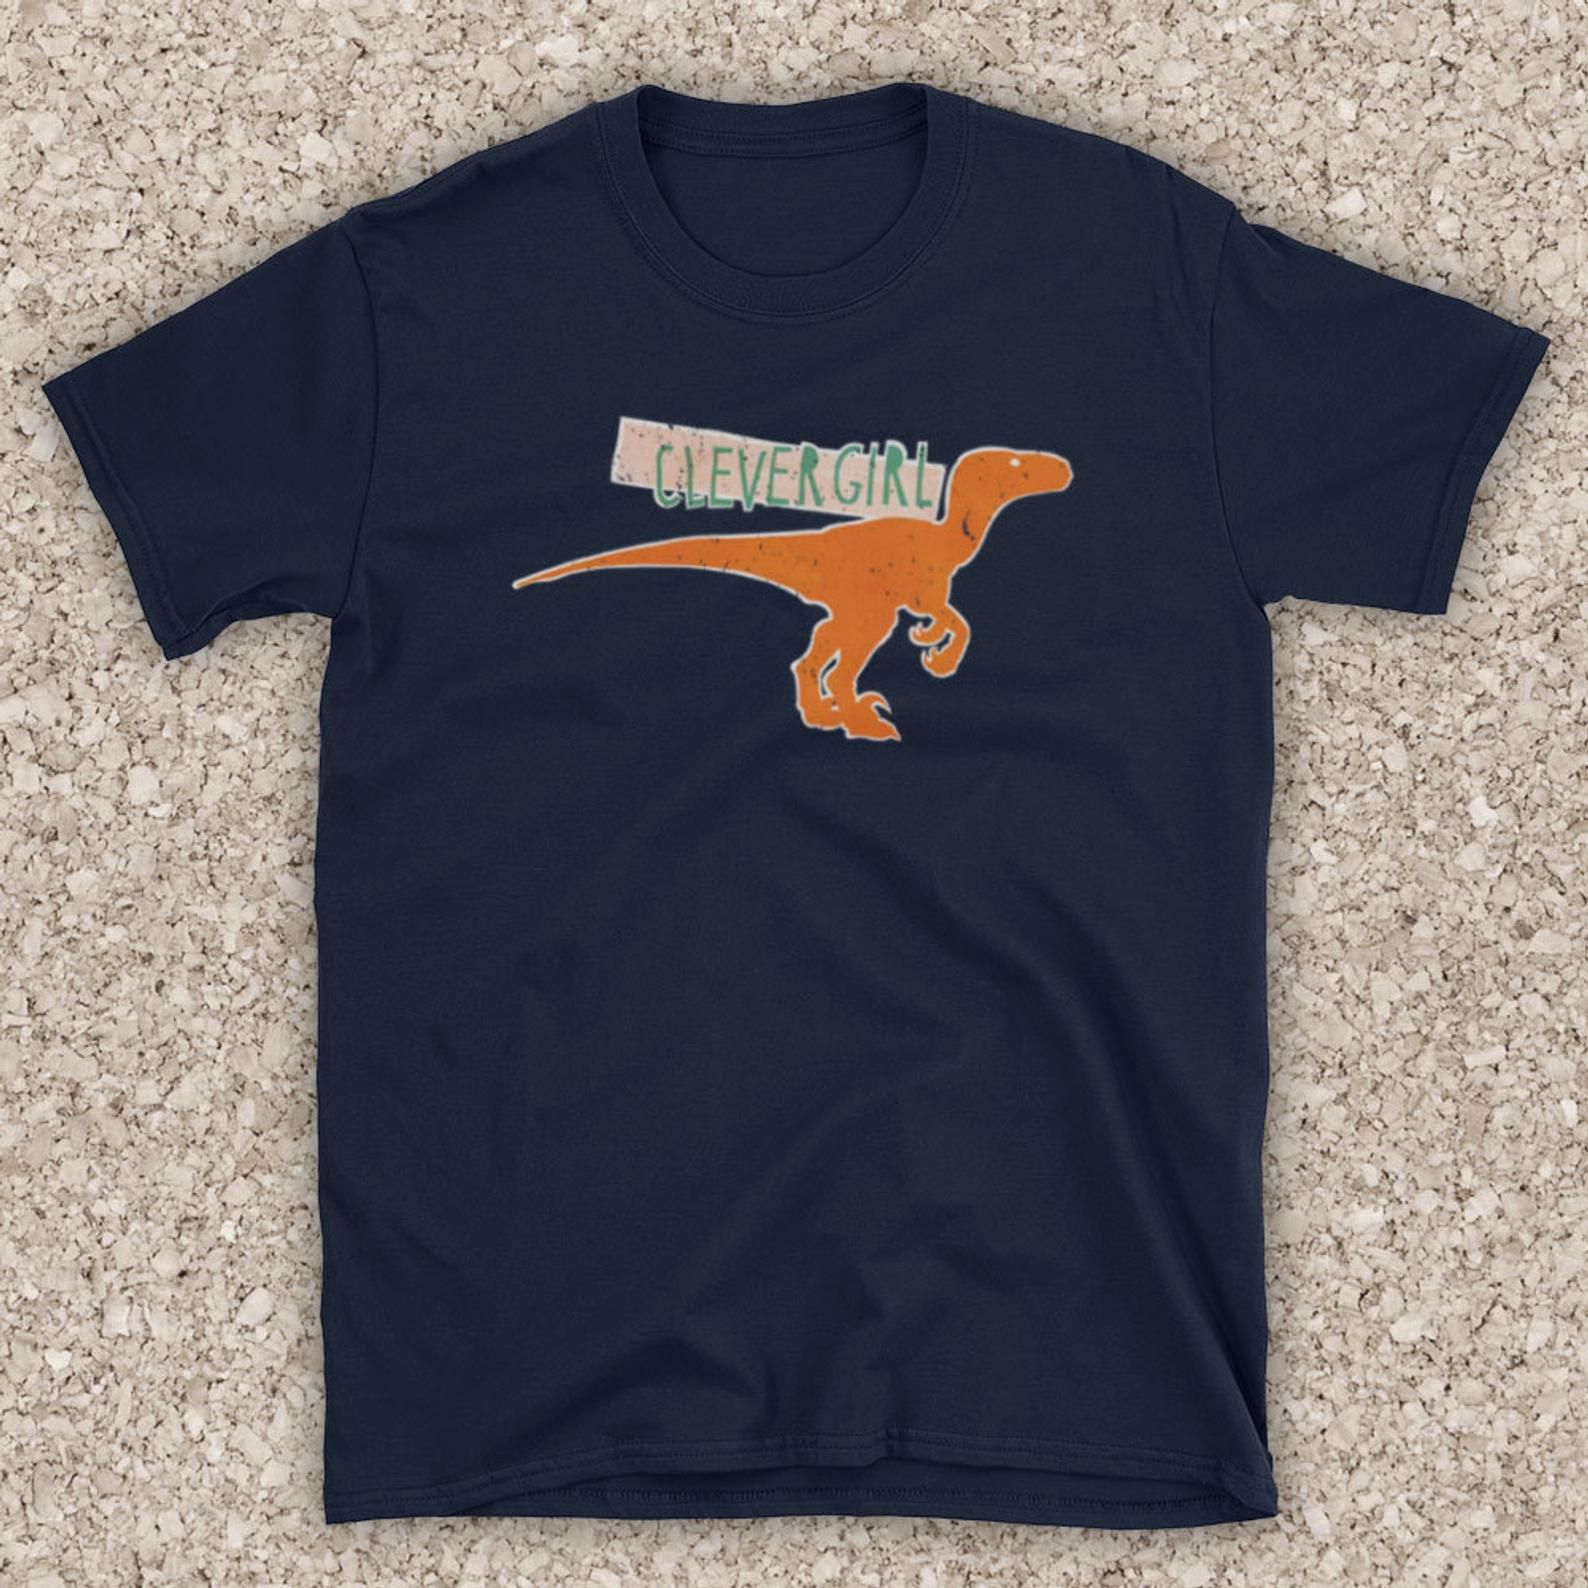 Jurassic Park Clever Girl Velociraptor Sci Fi Dinosaur Film Scene Slogan Un S T-Shirt